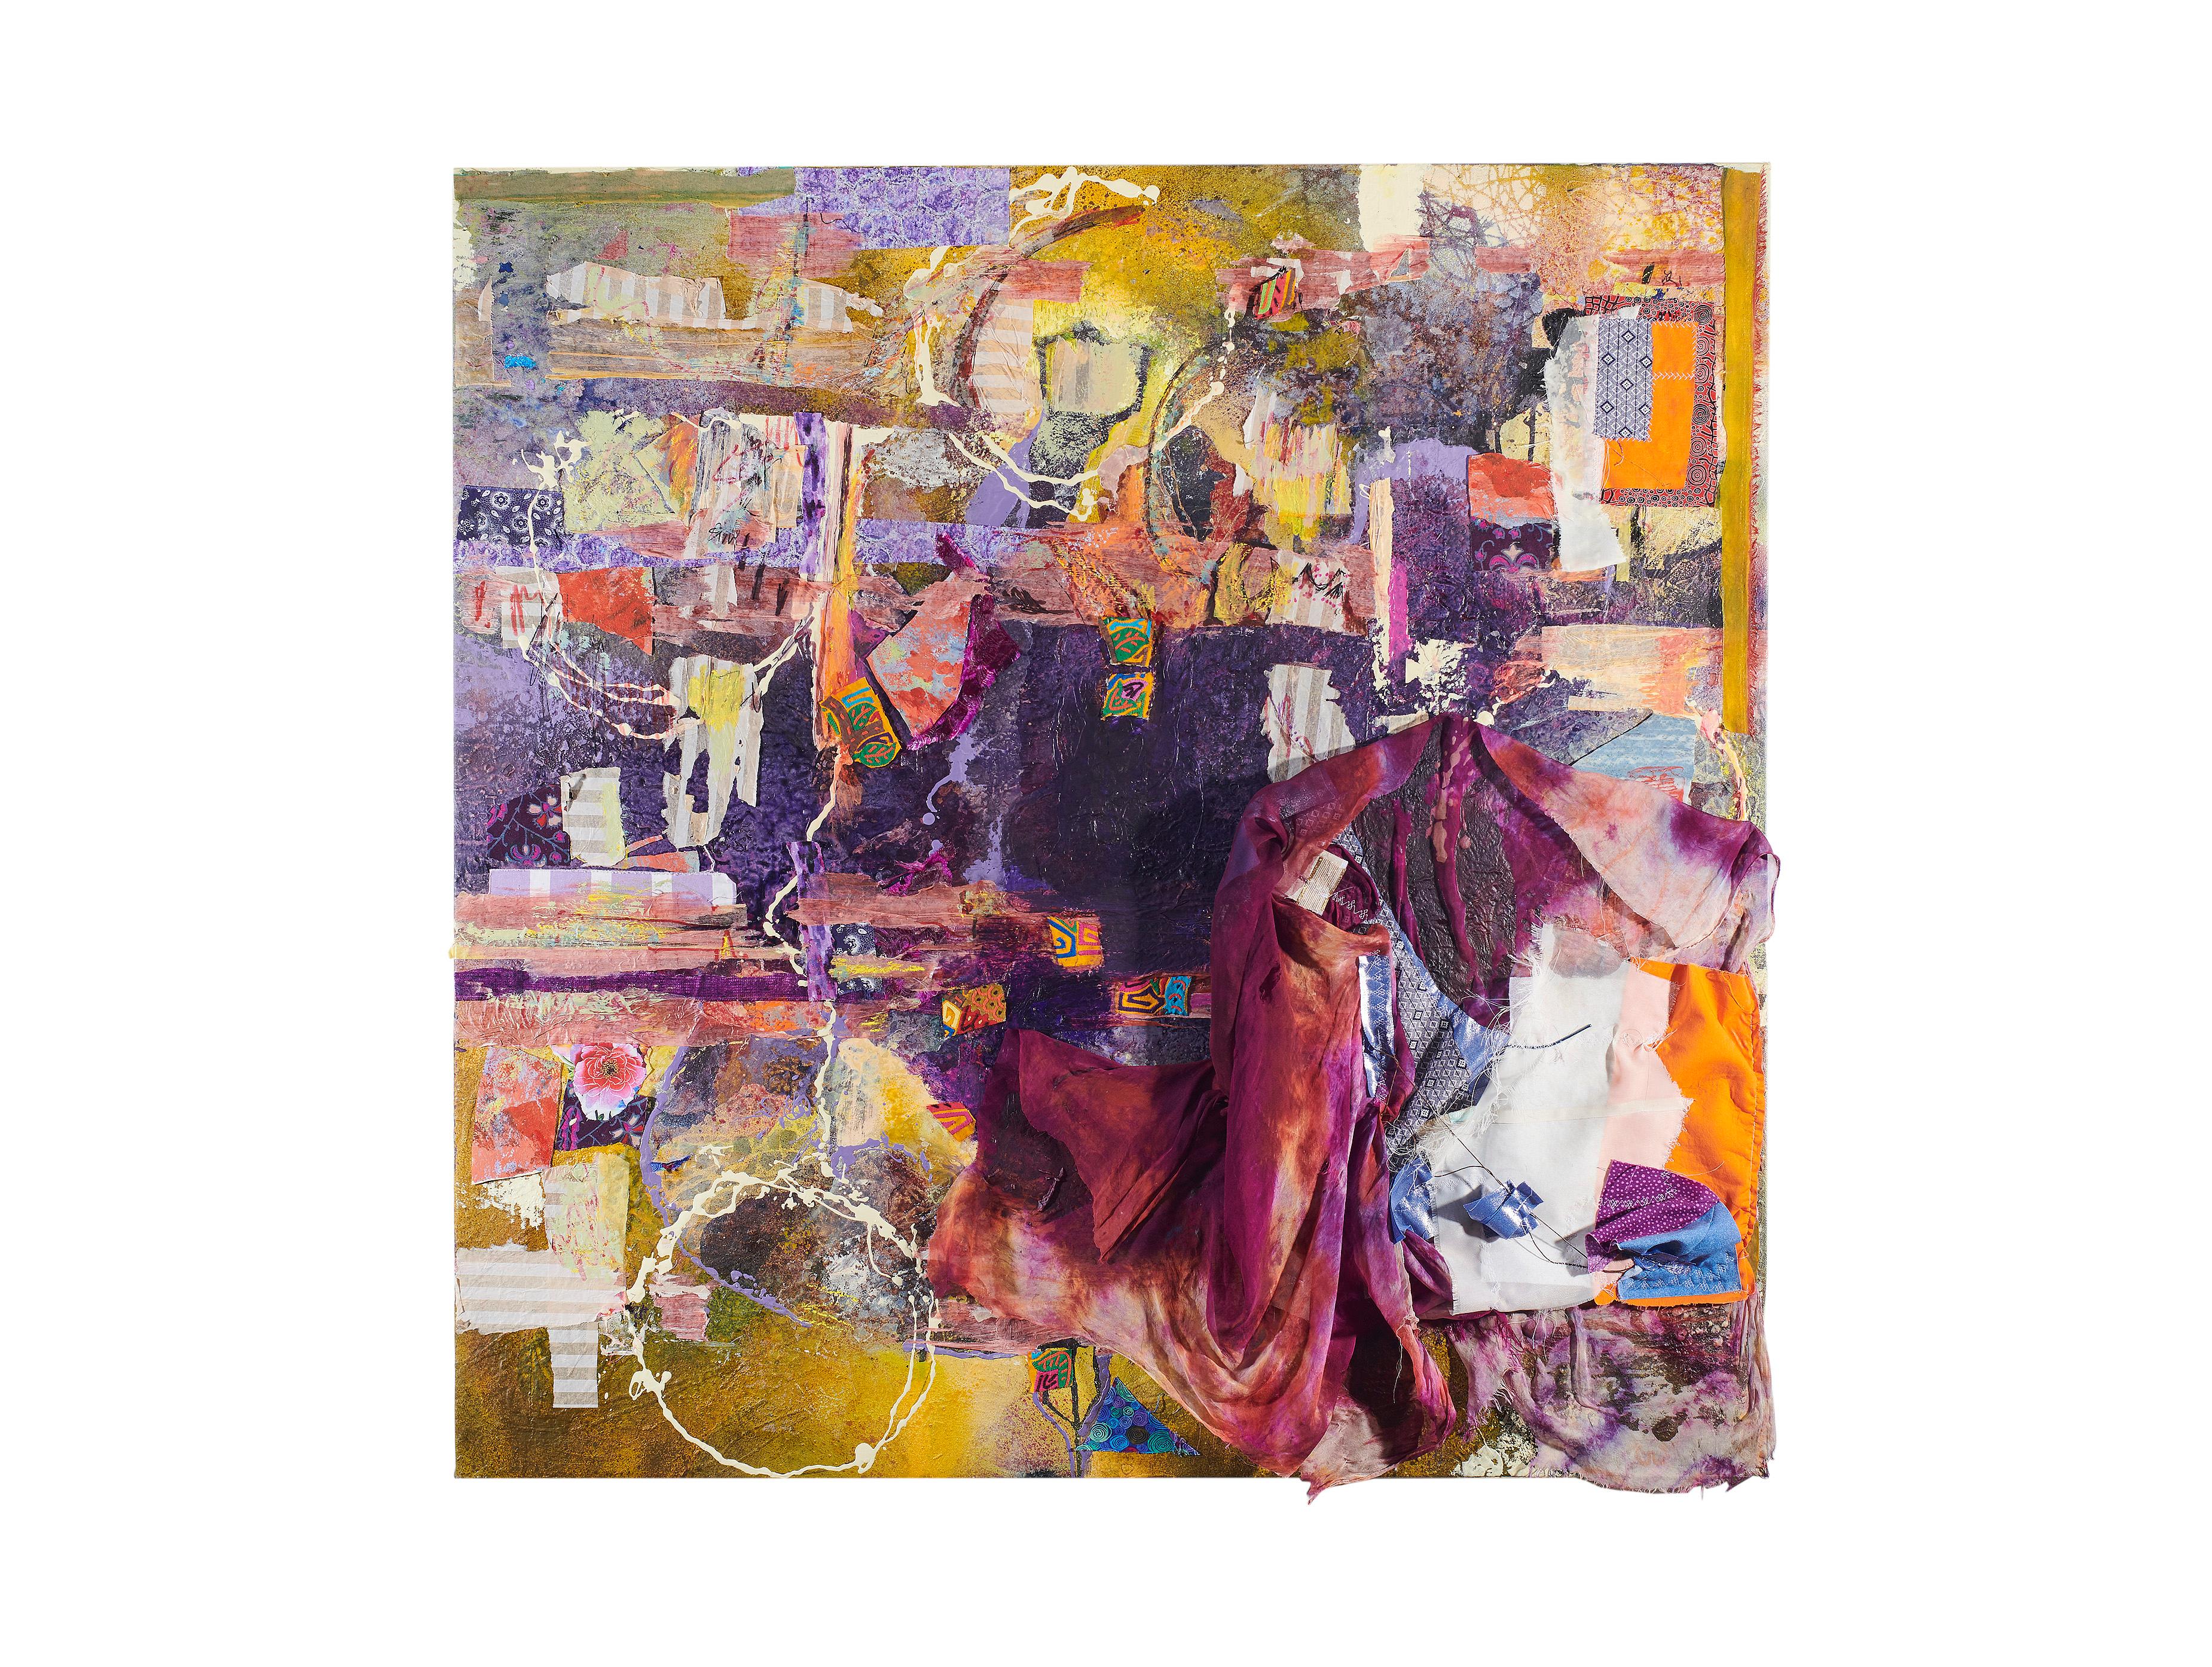 Window Shopping - Robert Rauschenberg type Abstract in Purple + Yellow  - Painting by Jennifer Blalack